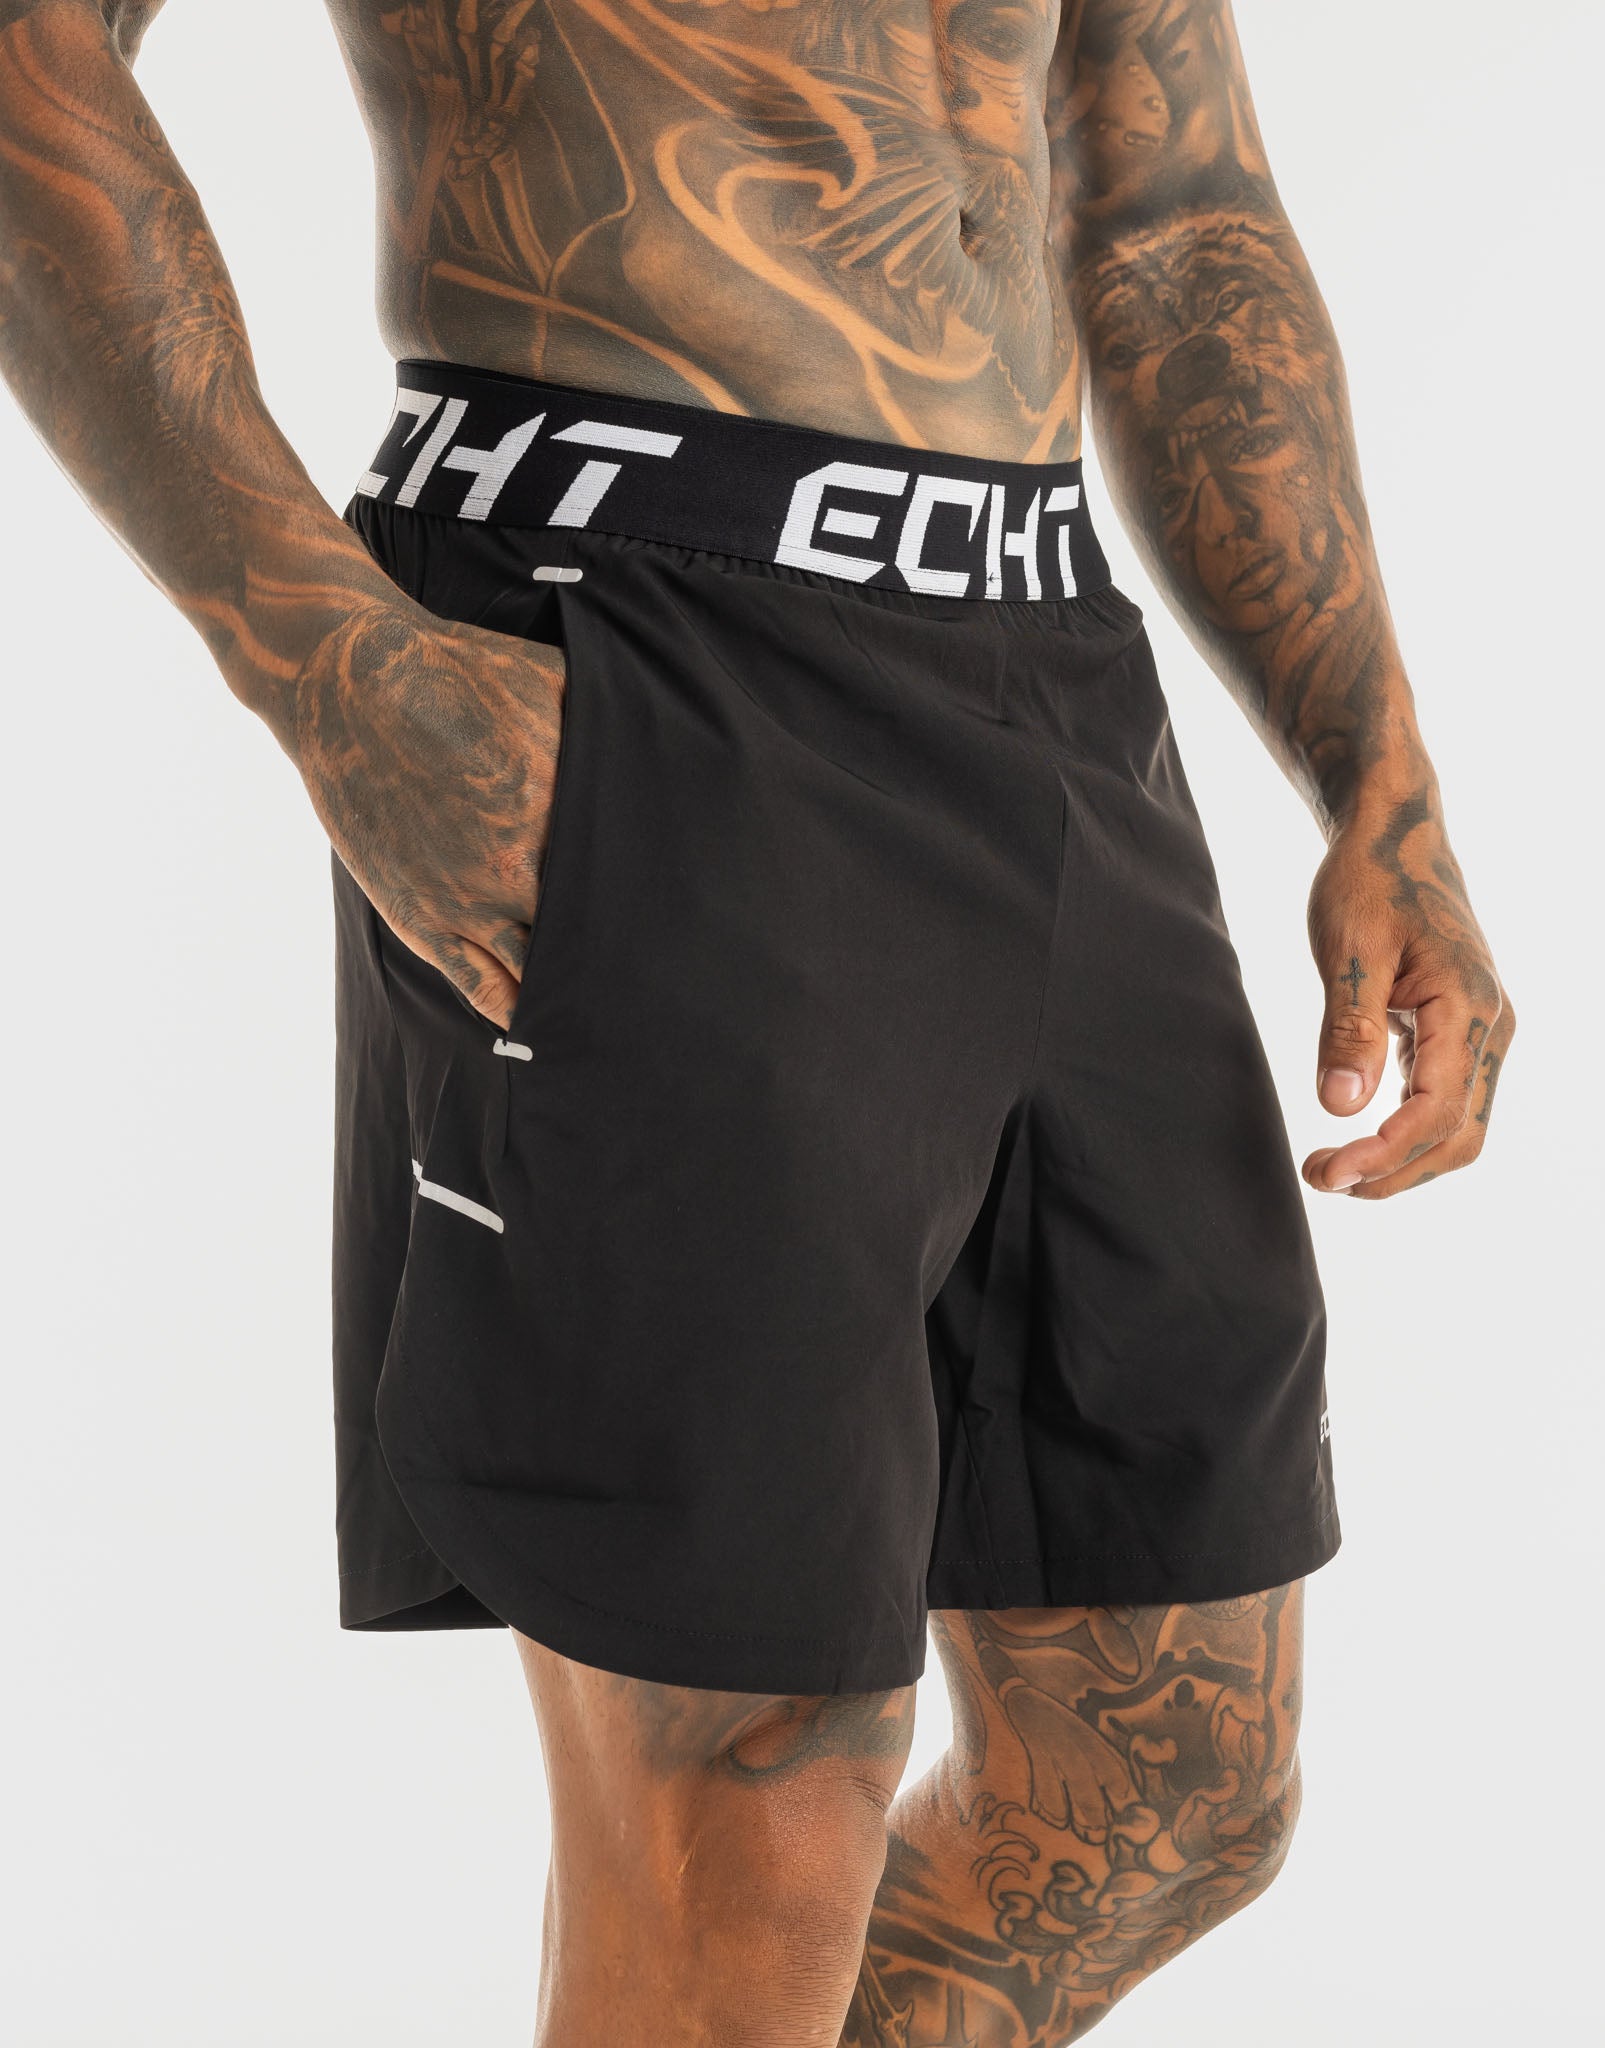 Echt Ultimate Shorts - Black